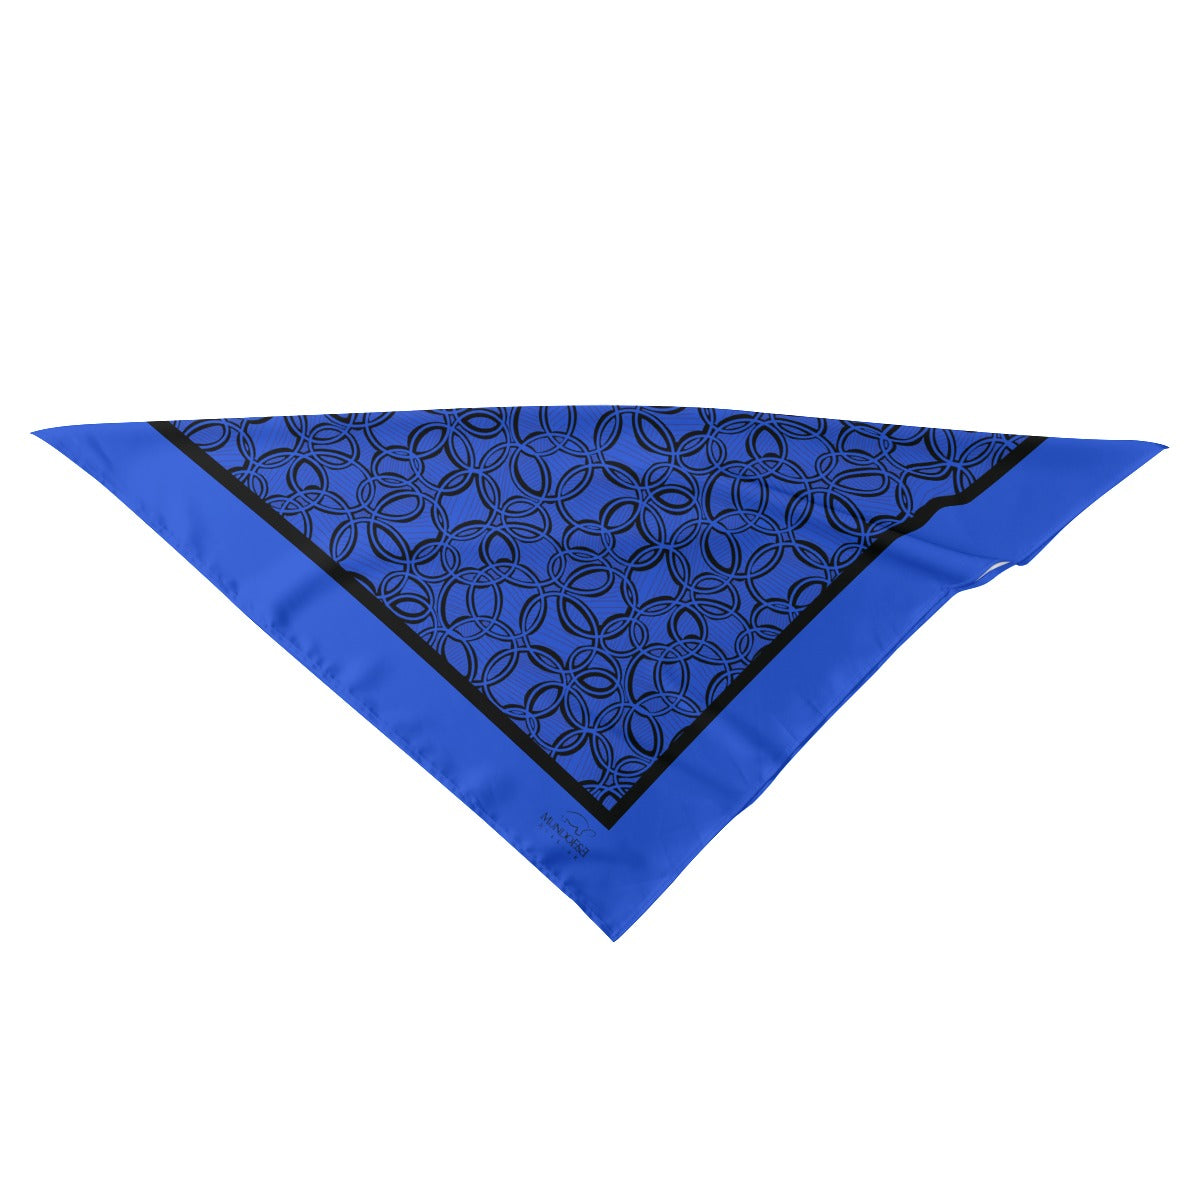 Geometric Blue & Black Geometric Silk Scarf. Design hand-painted by the Designer Maria Alejandra Echenique